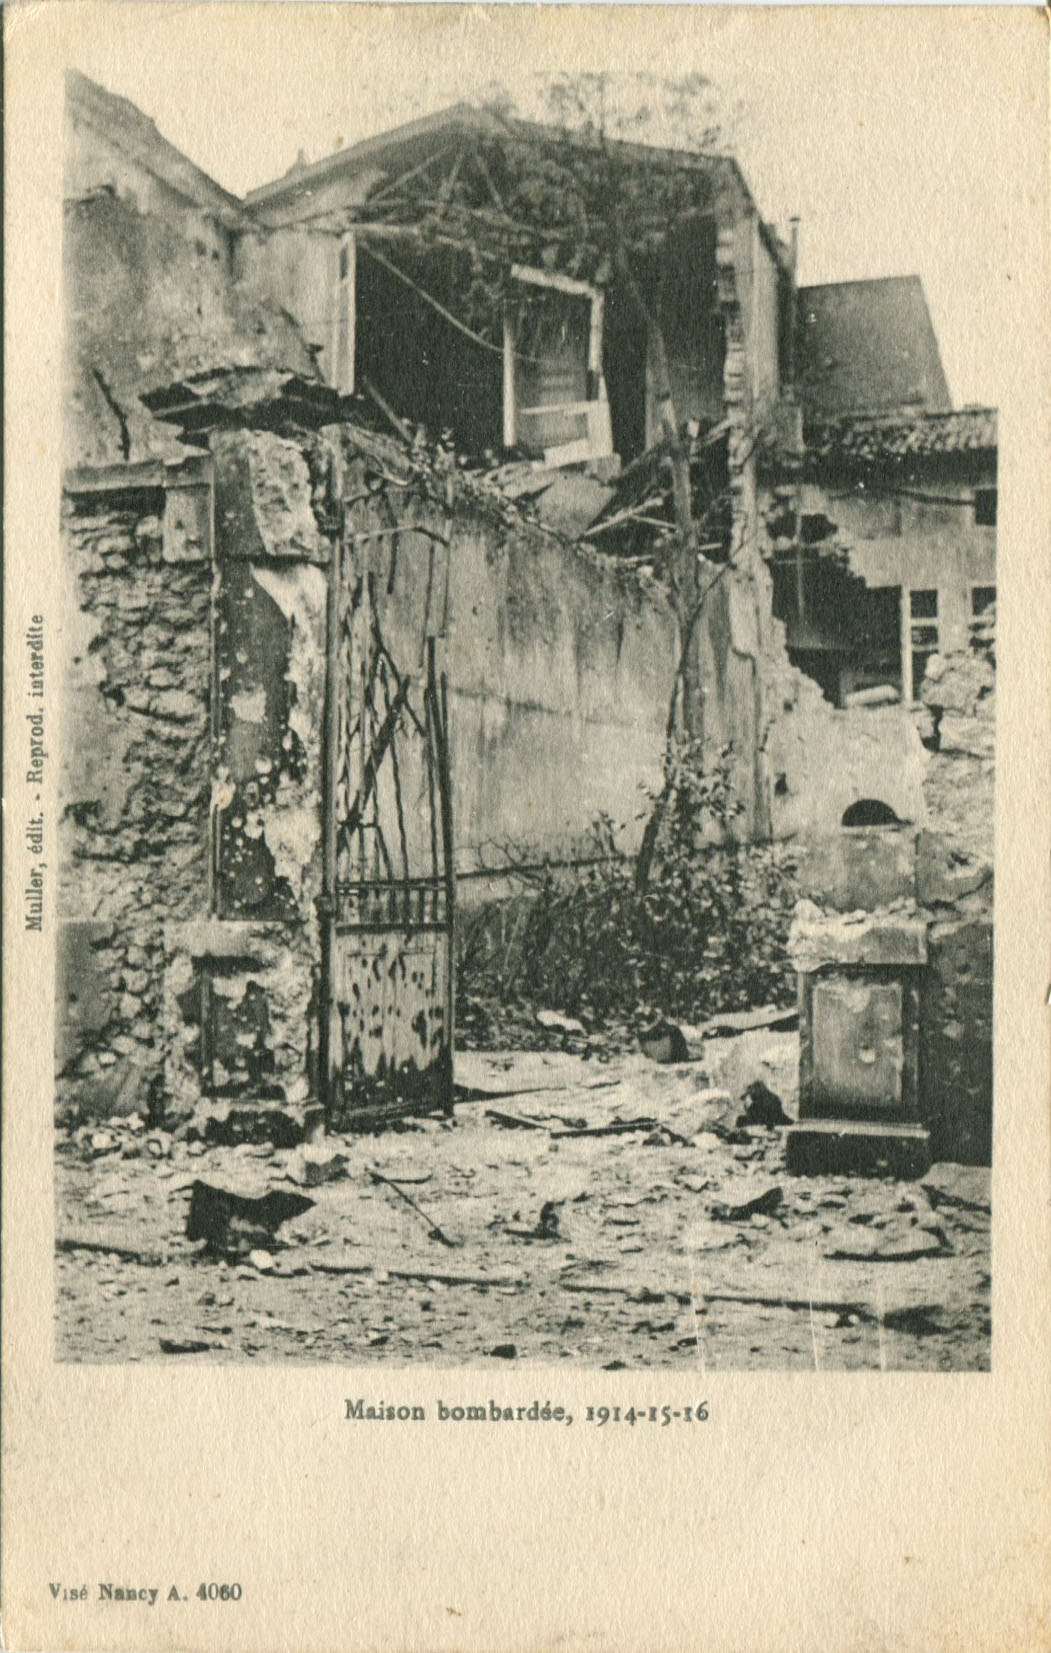 Maison bombardée